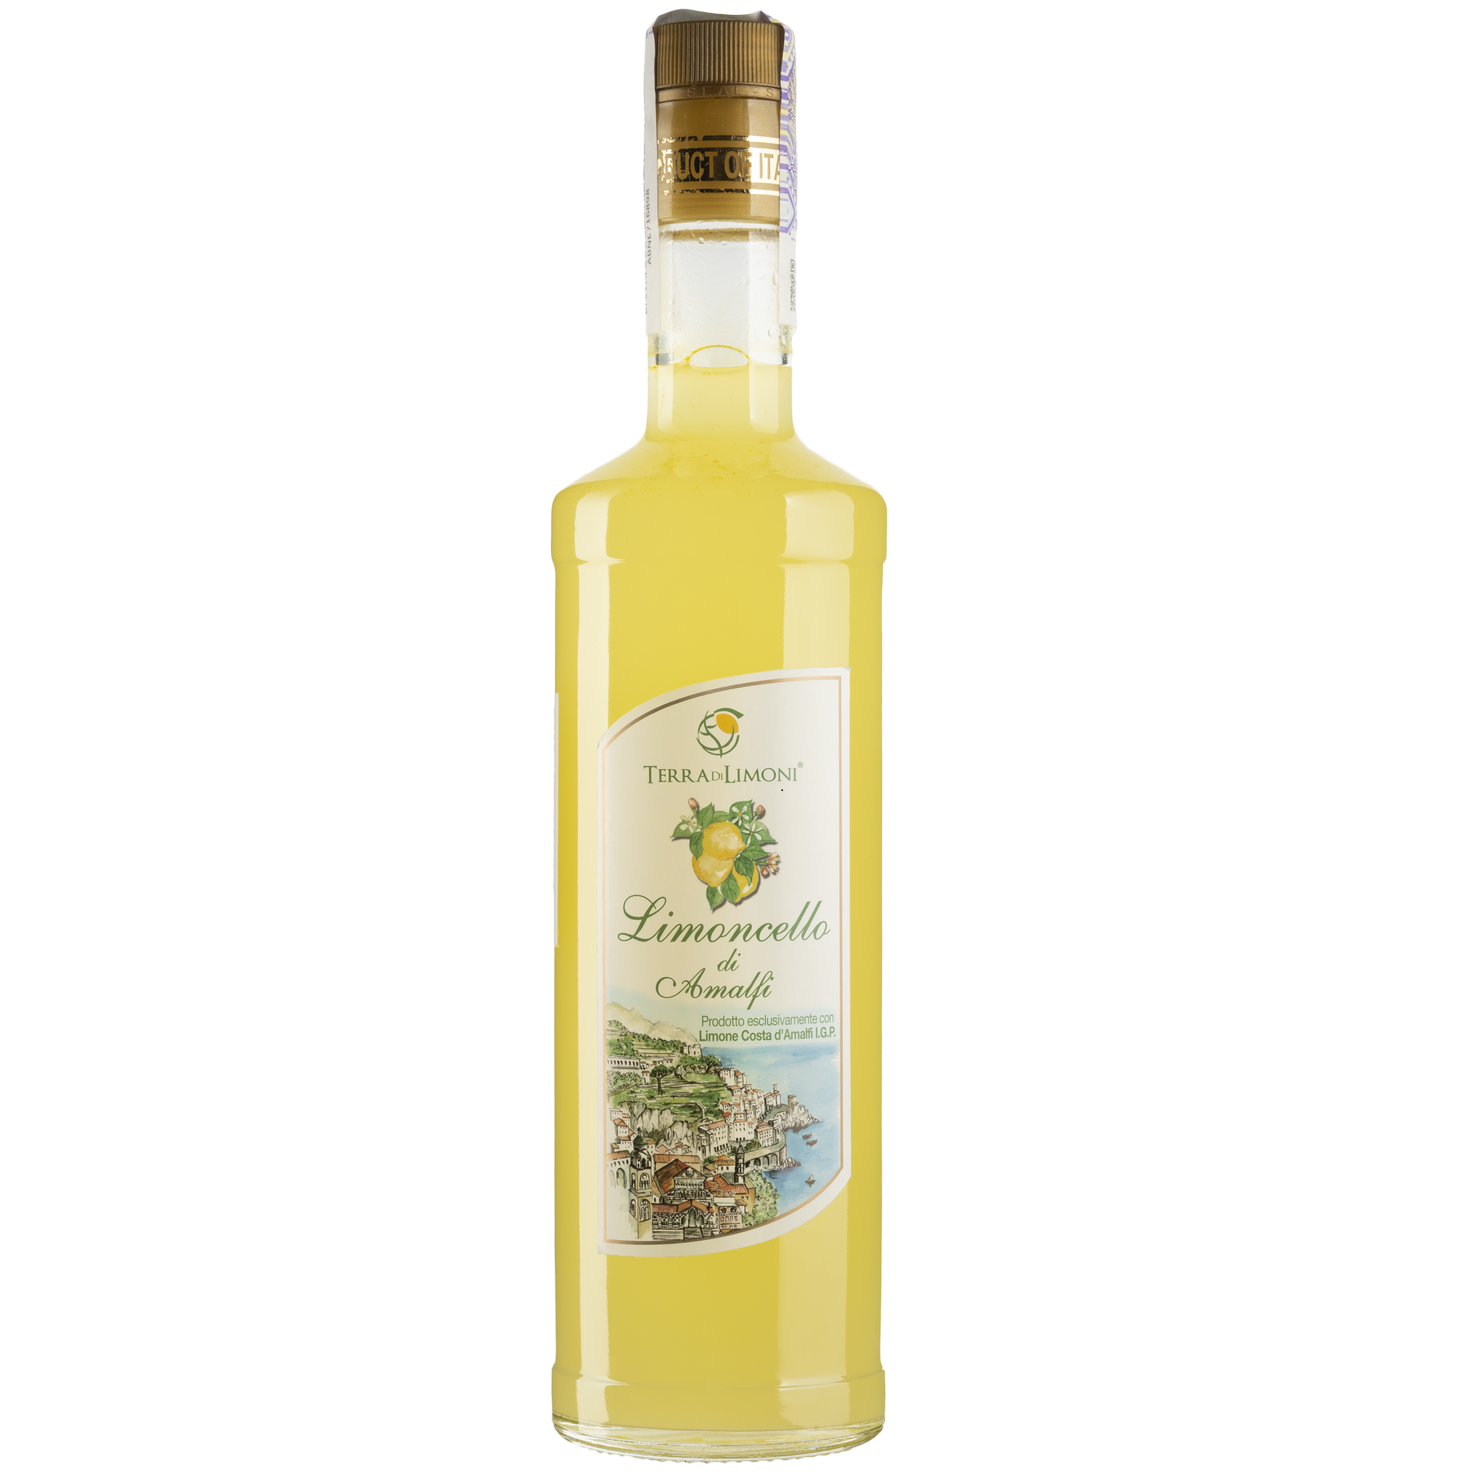 Лікер Terra di Limoni Liquore al limoncello Costa d'Amalfi, 25%, 0,7 л (Q5893) - фото 1